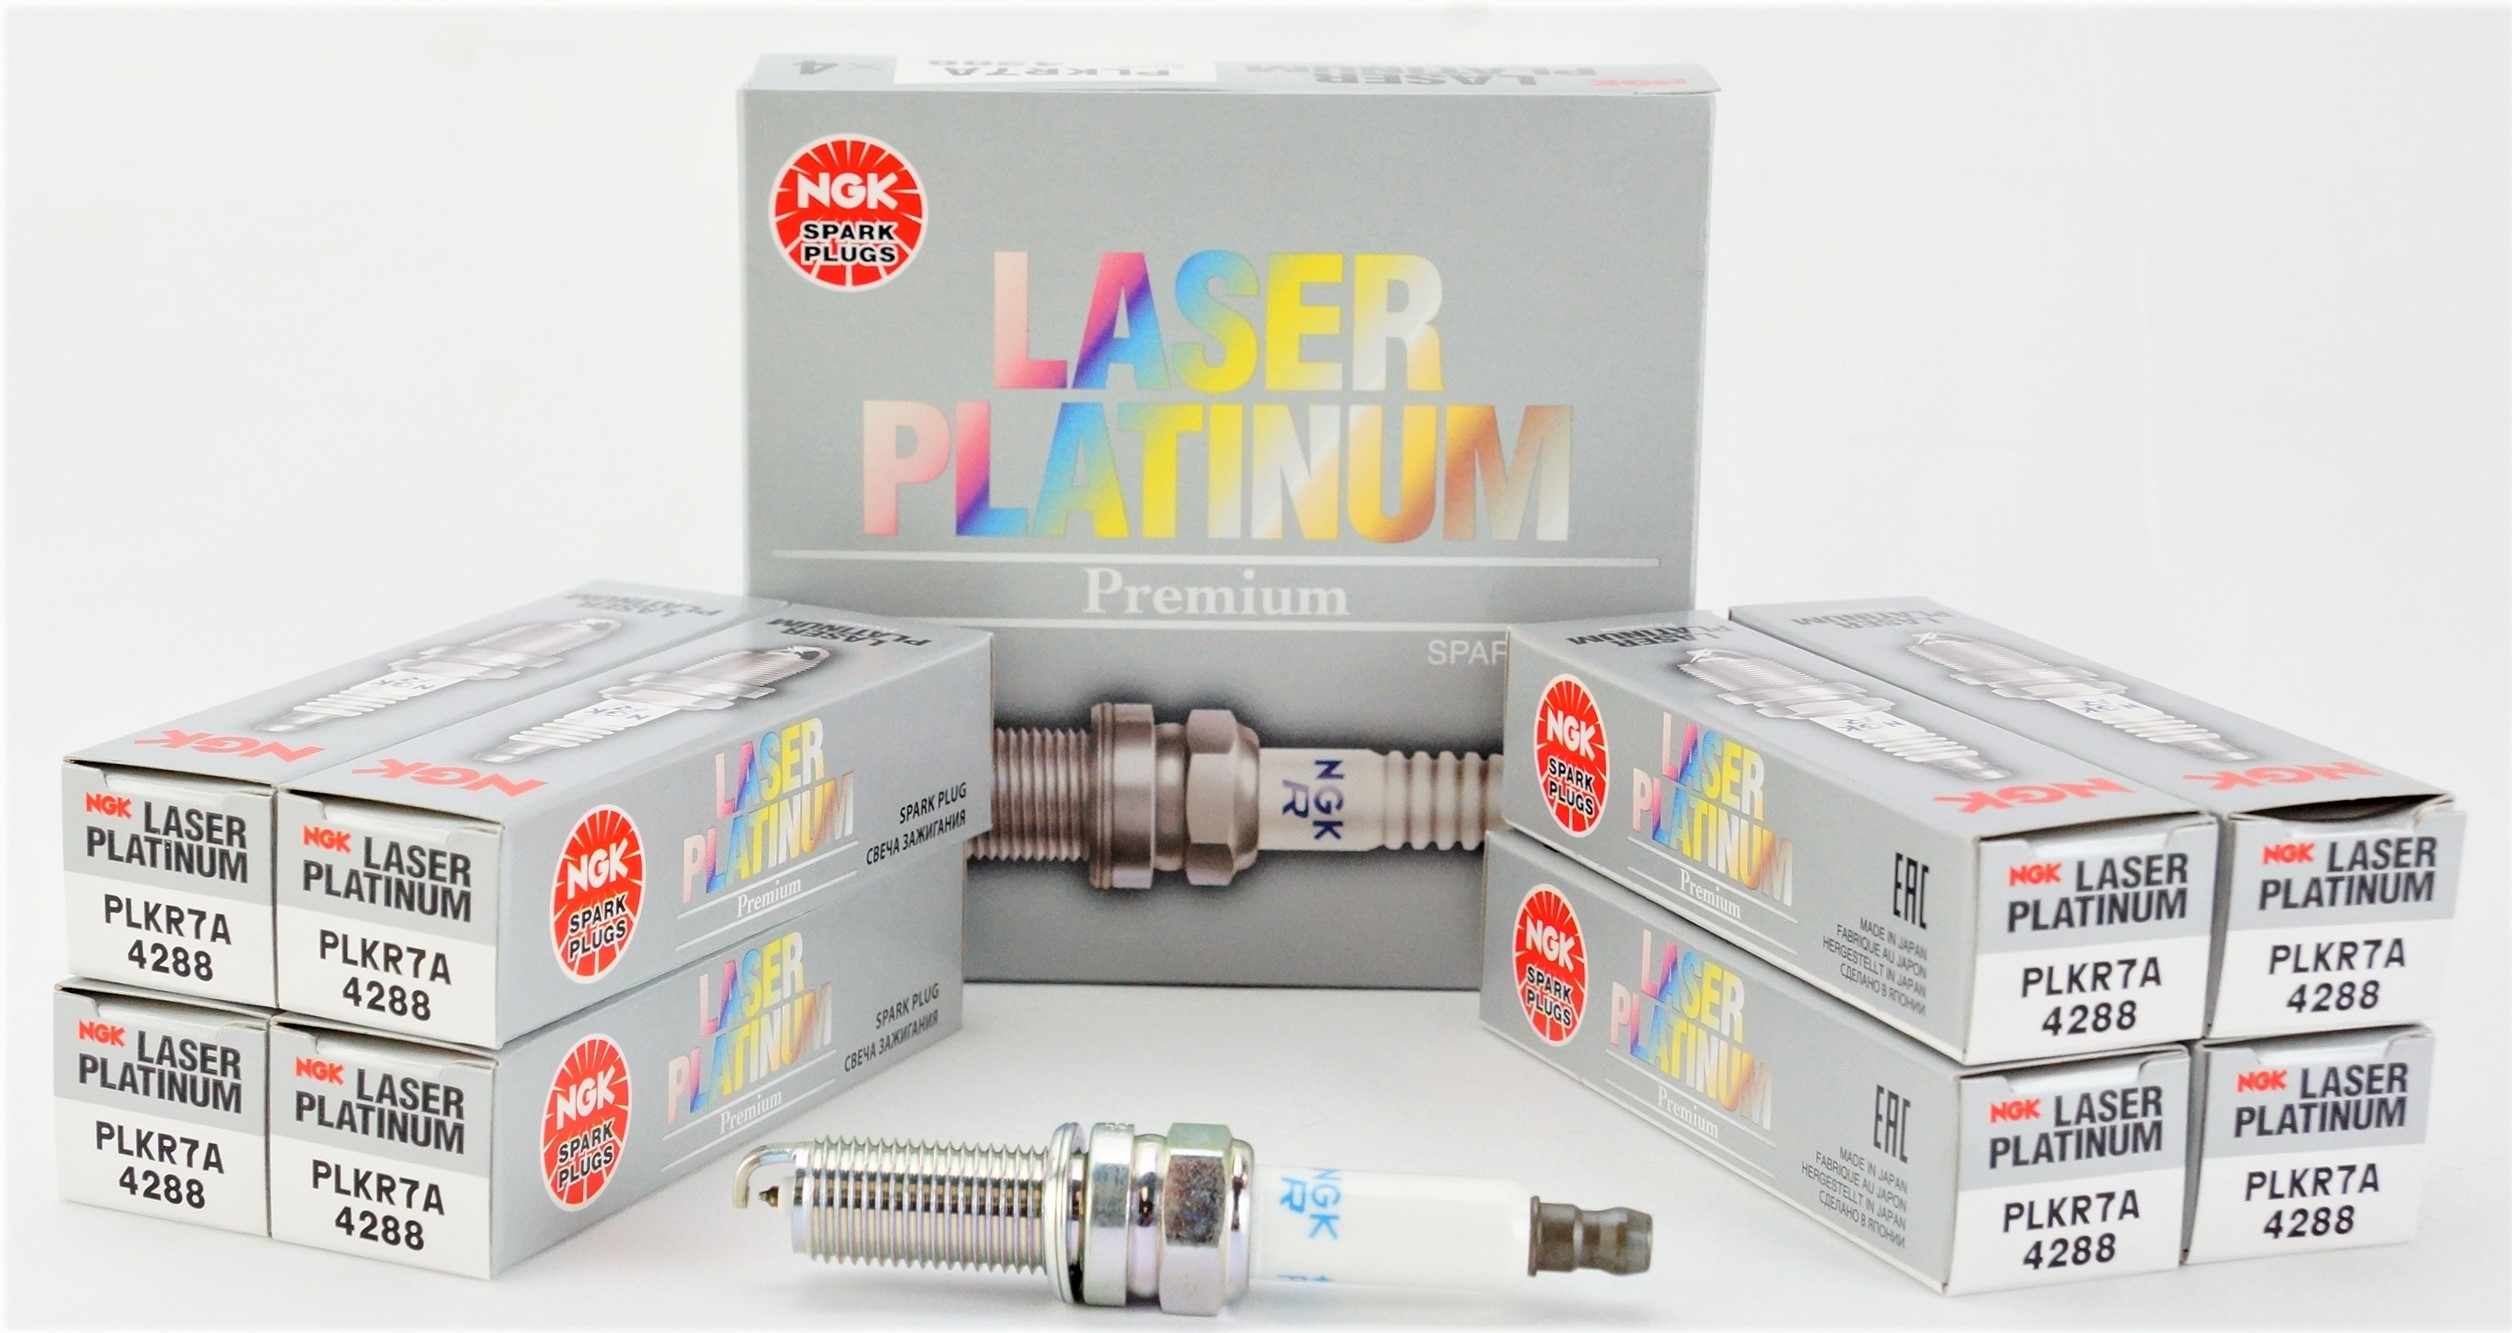 Set of 8 NGK 4288 PLKR7A Premium Laser Platinum Spark Plugs Fast Free Shipping - image 1